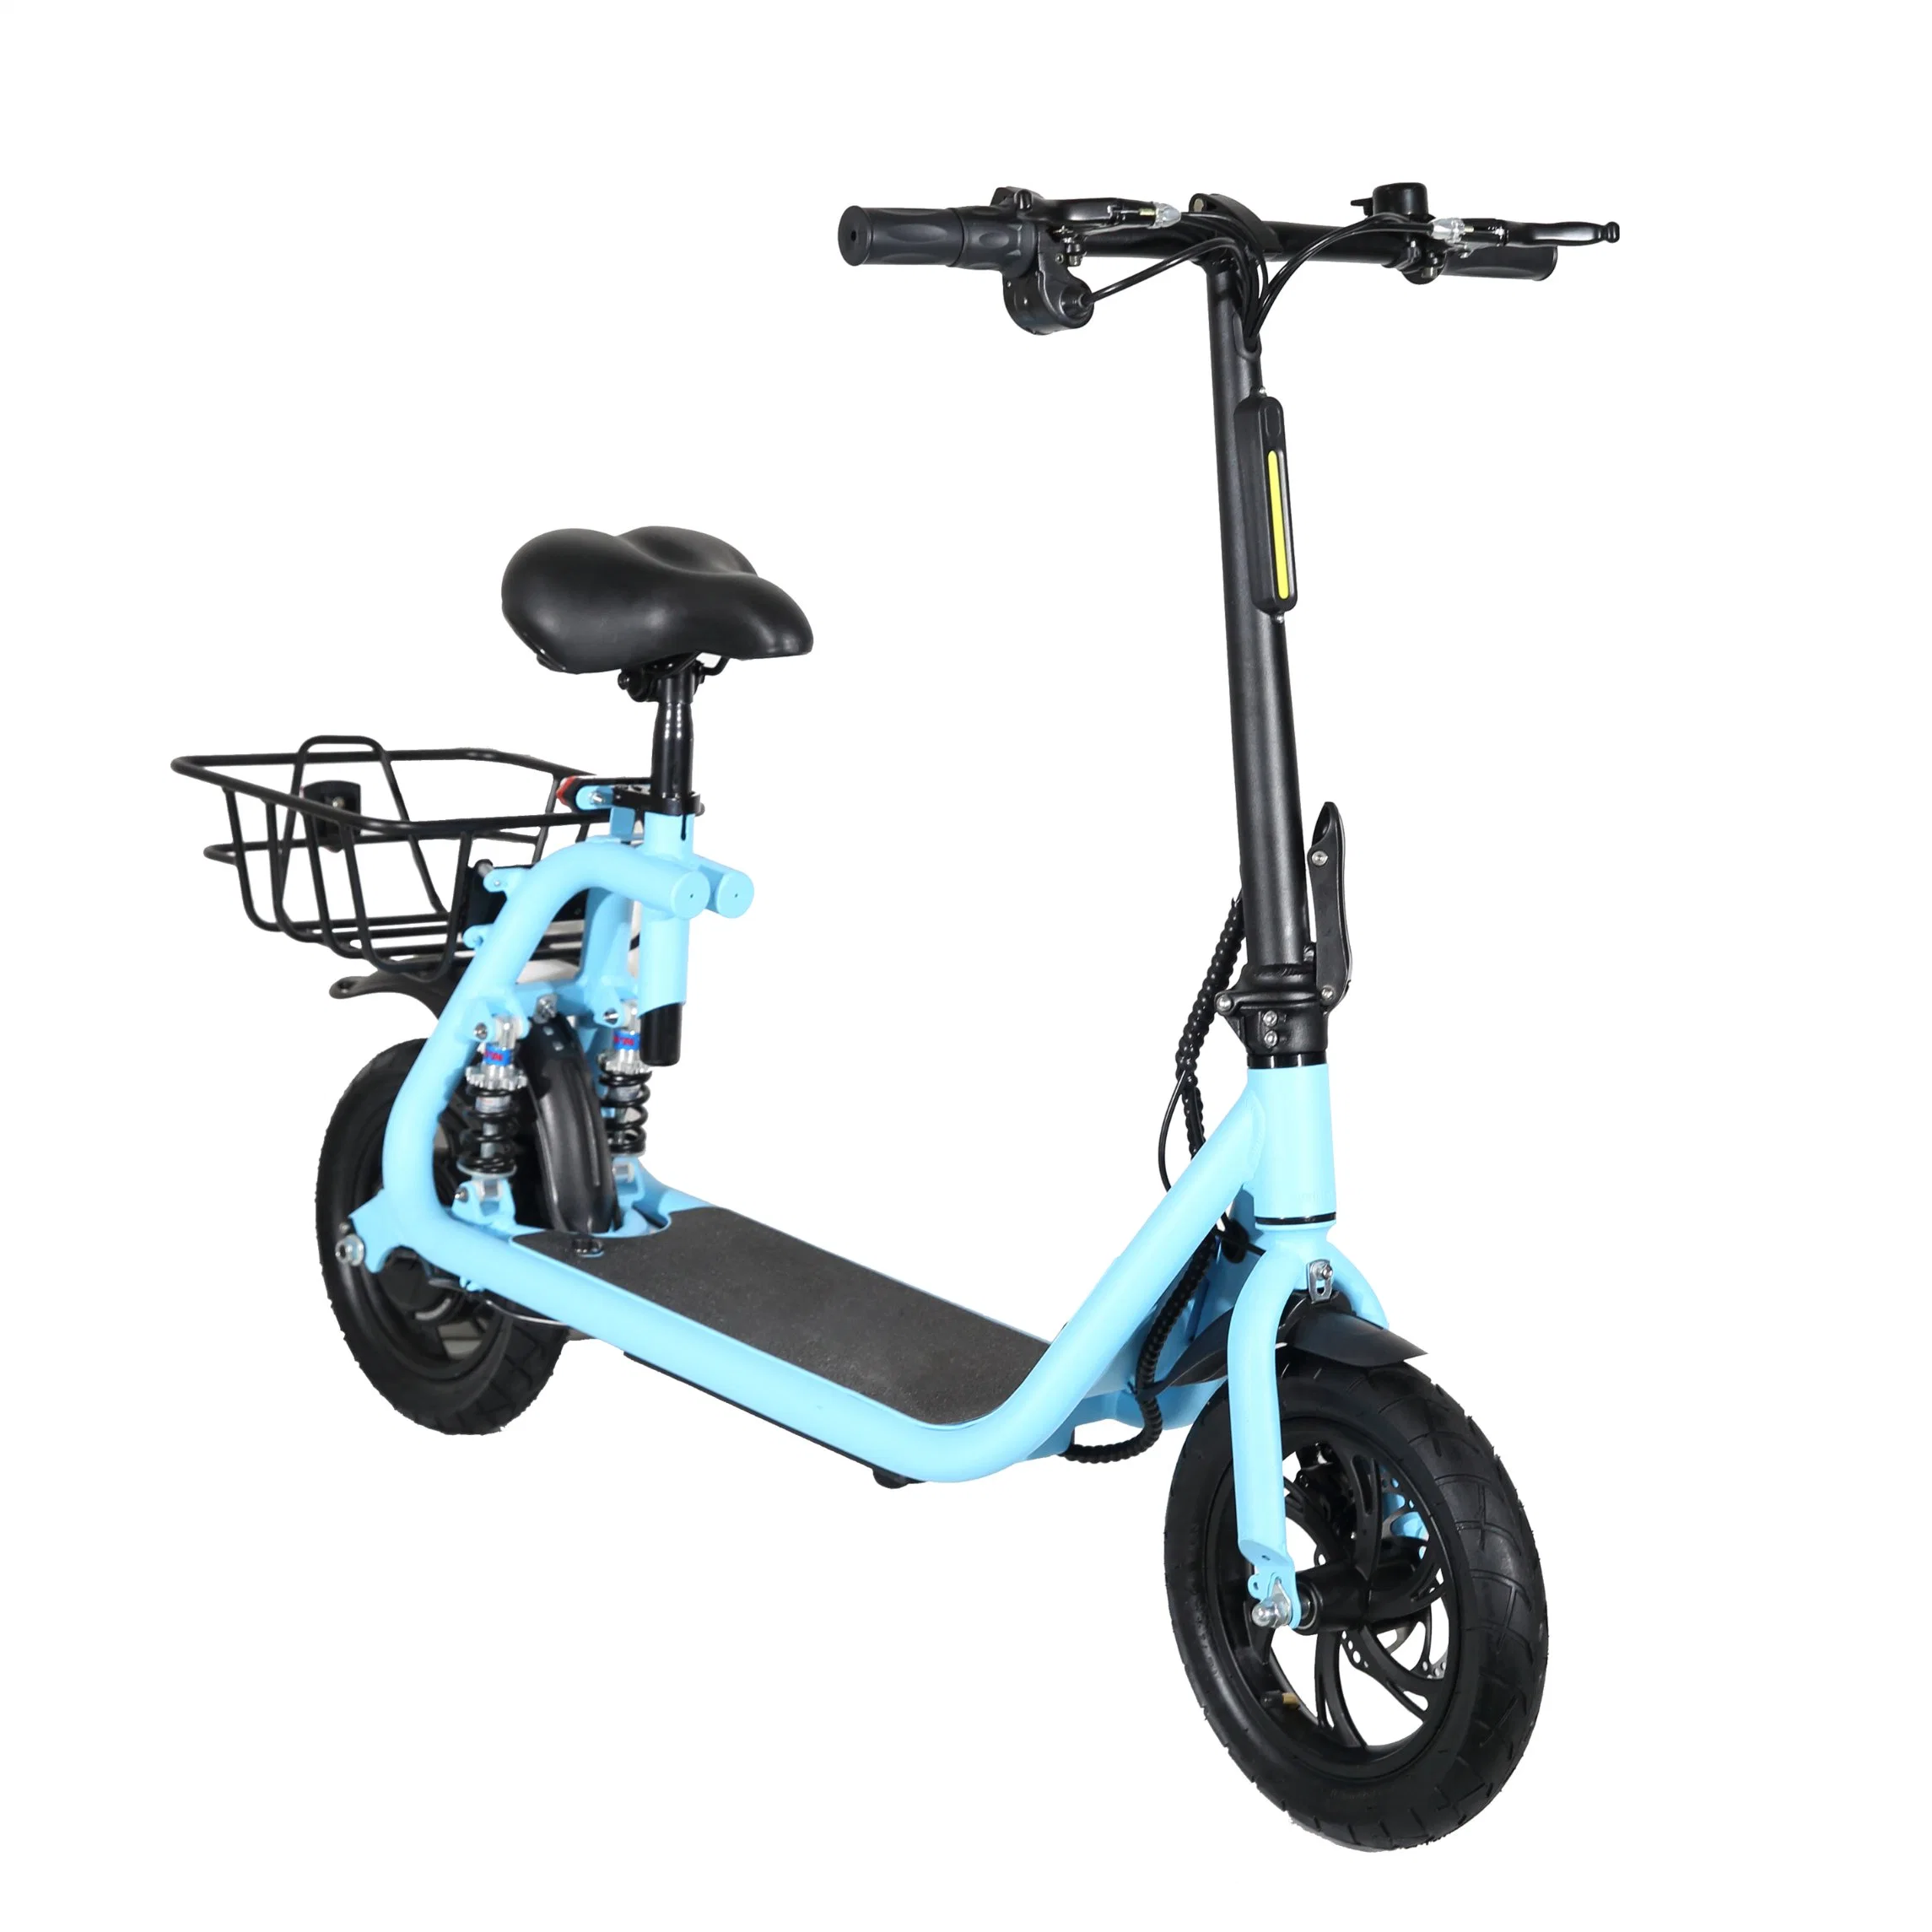 2022 New Product Bike Bicycle Electric Fat Bike Beach Crusier /Electric Bicycle 48V Road Electric Bike 36V500W